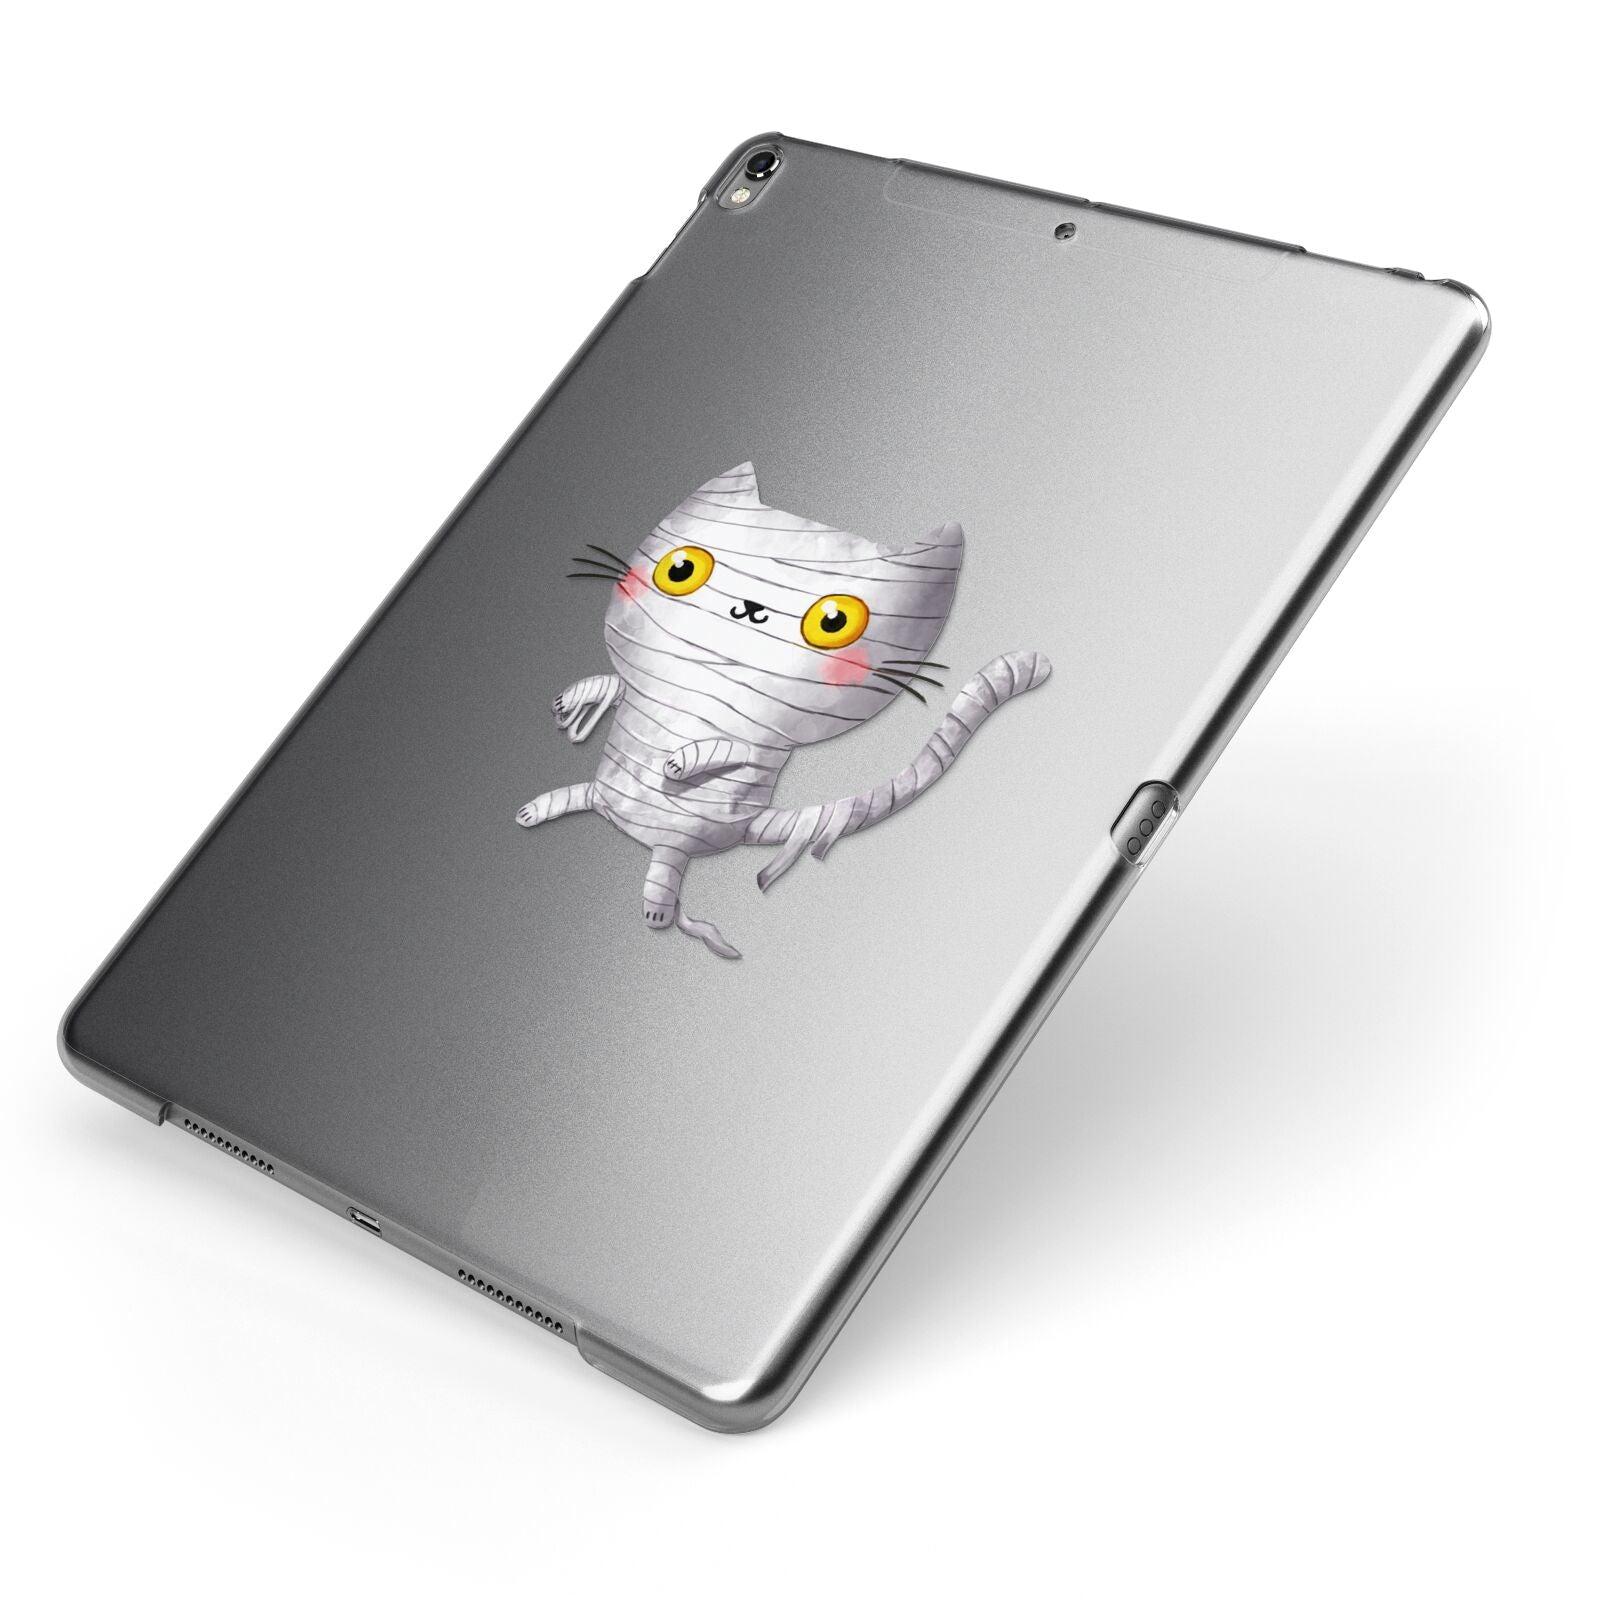 Mummy Cats Apple iPad Case on Grey iPad Side View